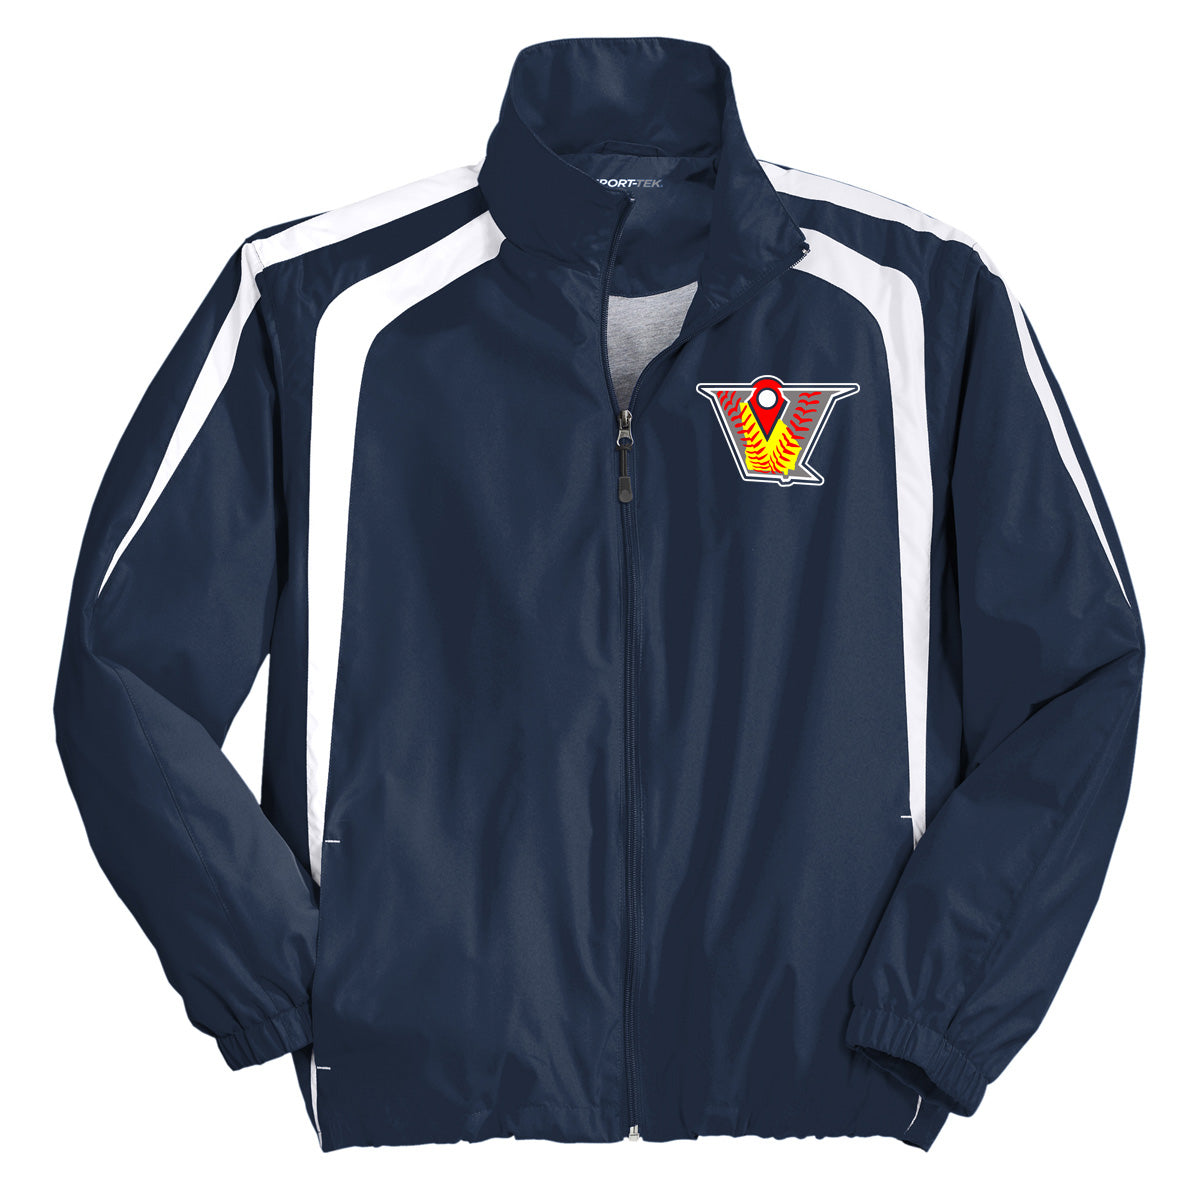 Velo FP - Colorblock Raglan Jacket with V Logo - Navy - Southern Grace Creations